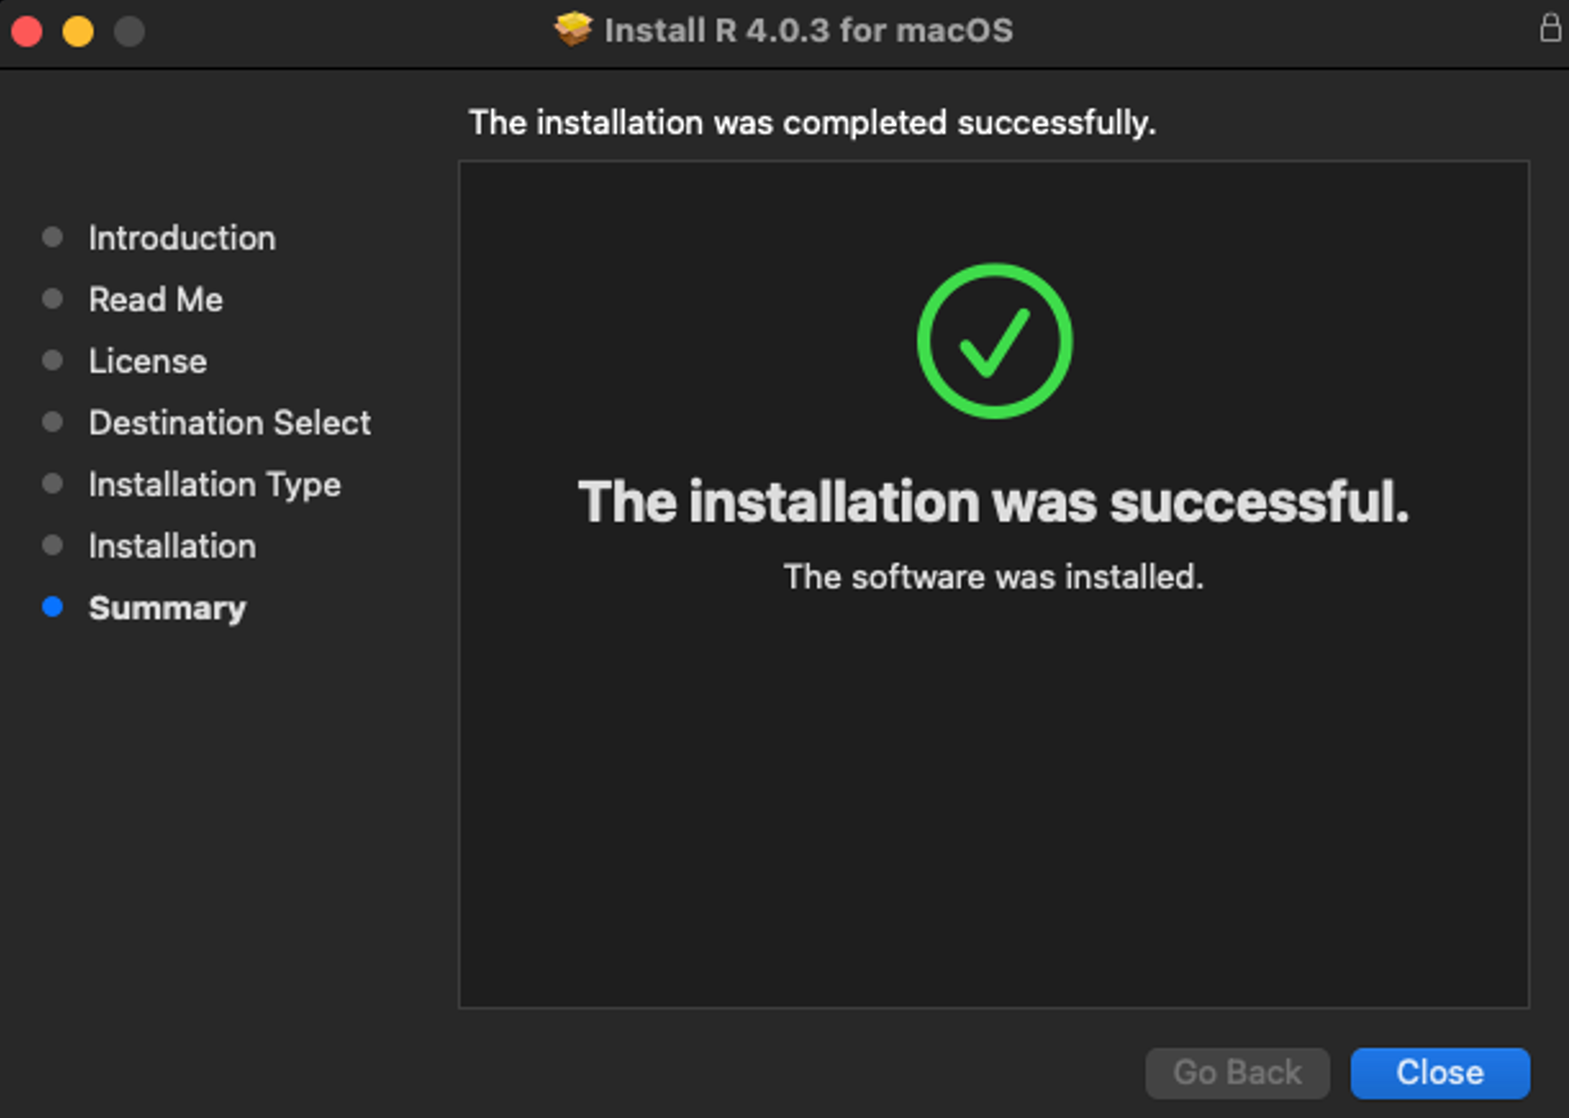 Install R on macOS – Installation finished. Source: uedufy.com